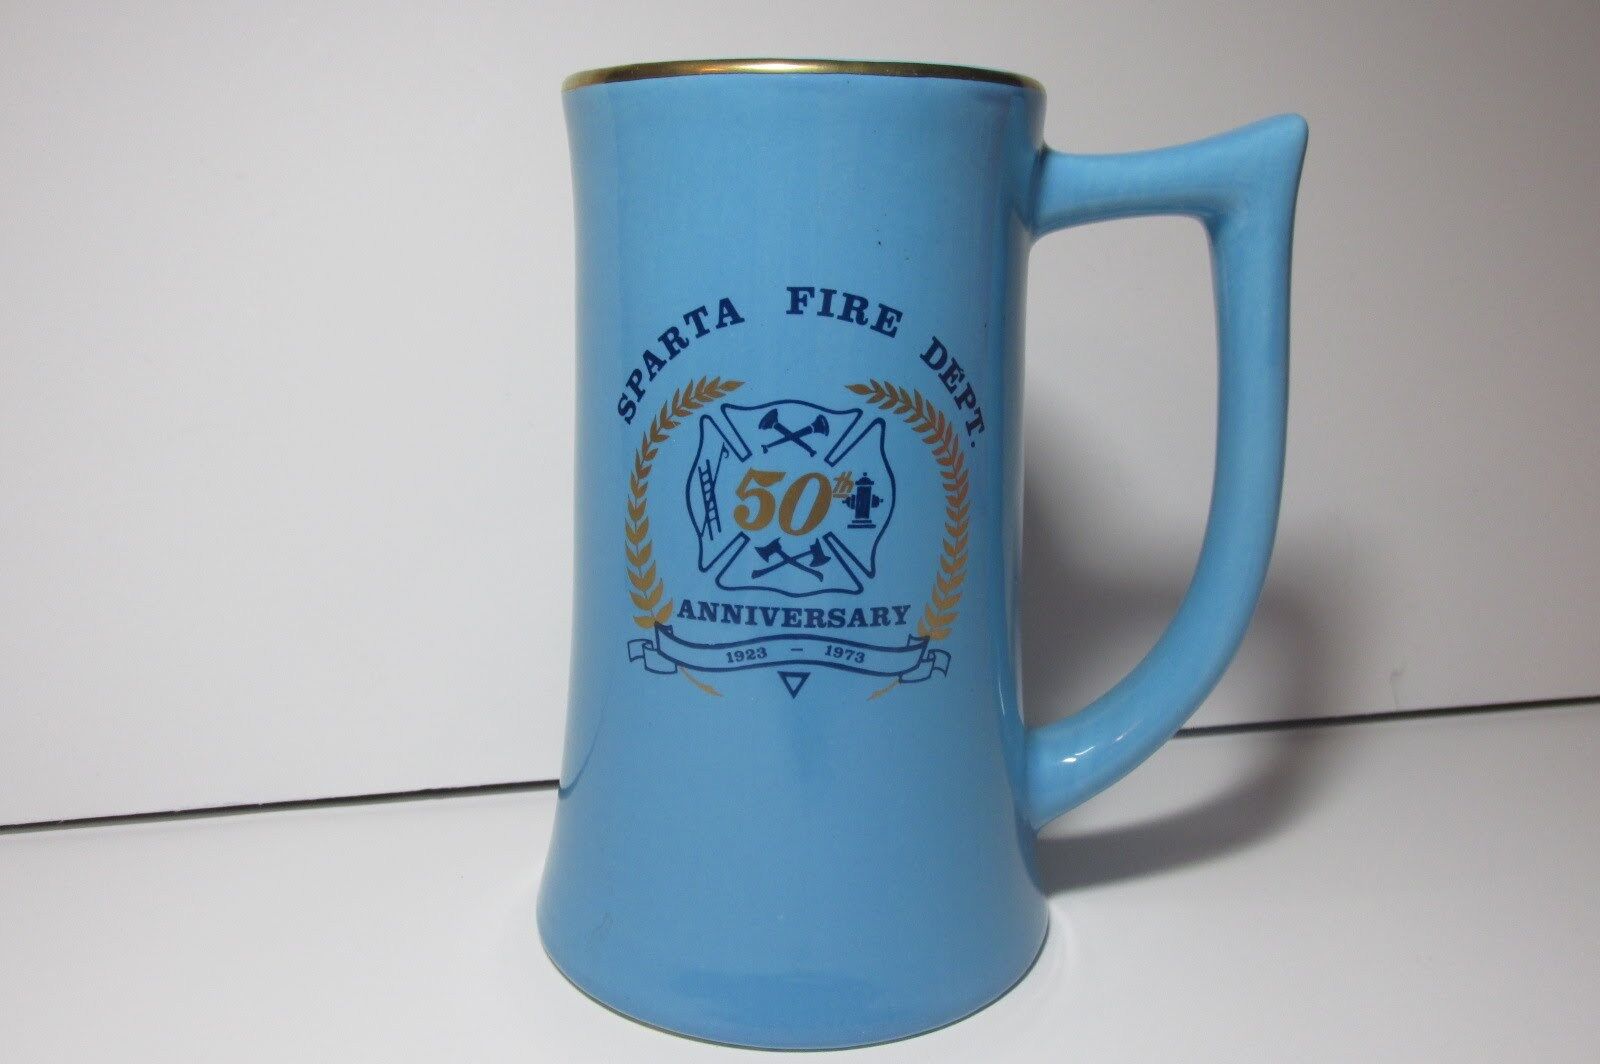 Vintage Sparta Fire Dept. 50th Anniversary 1923-1973 Cup Mug Beer Stein